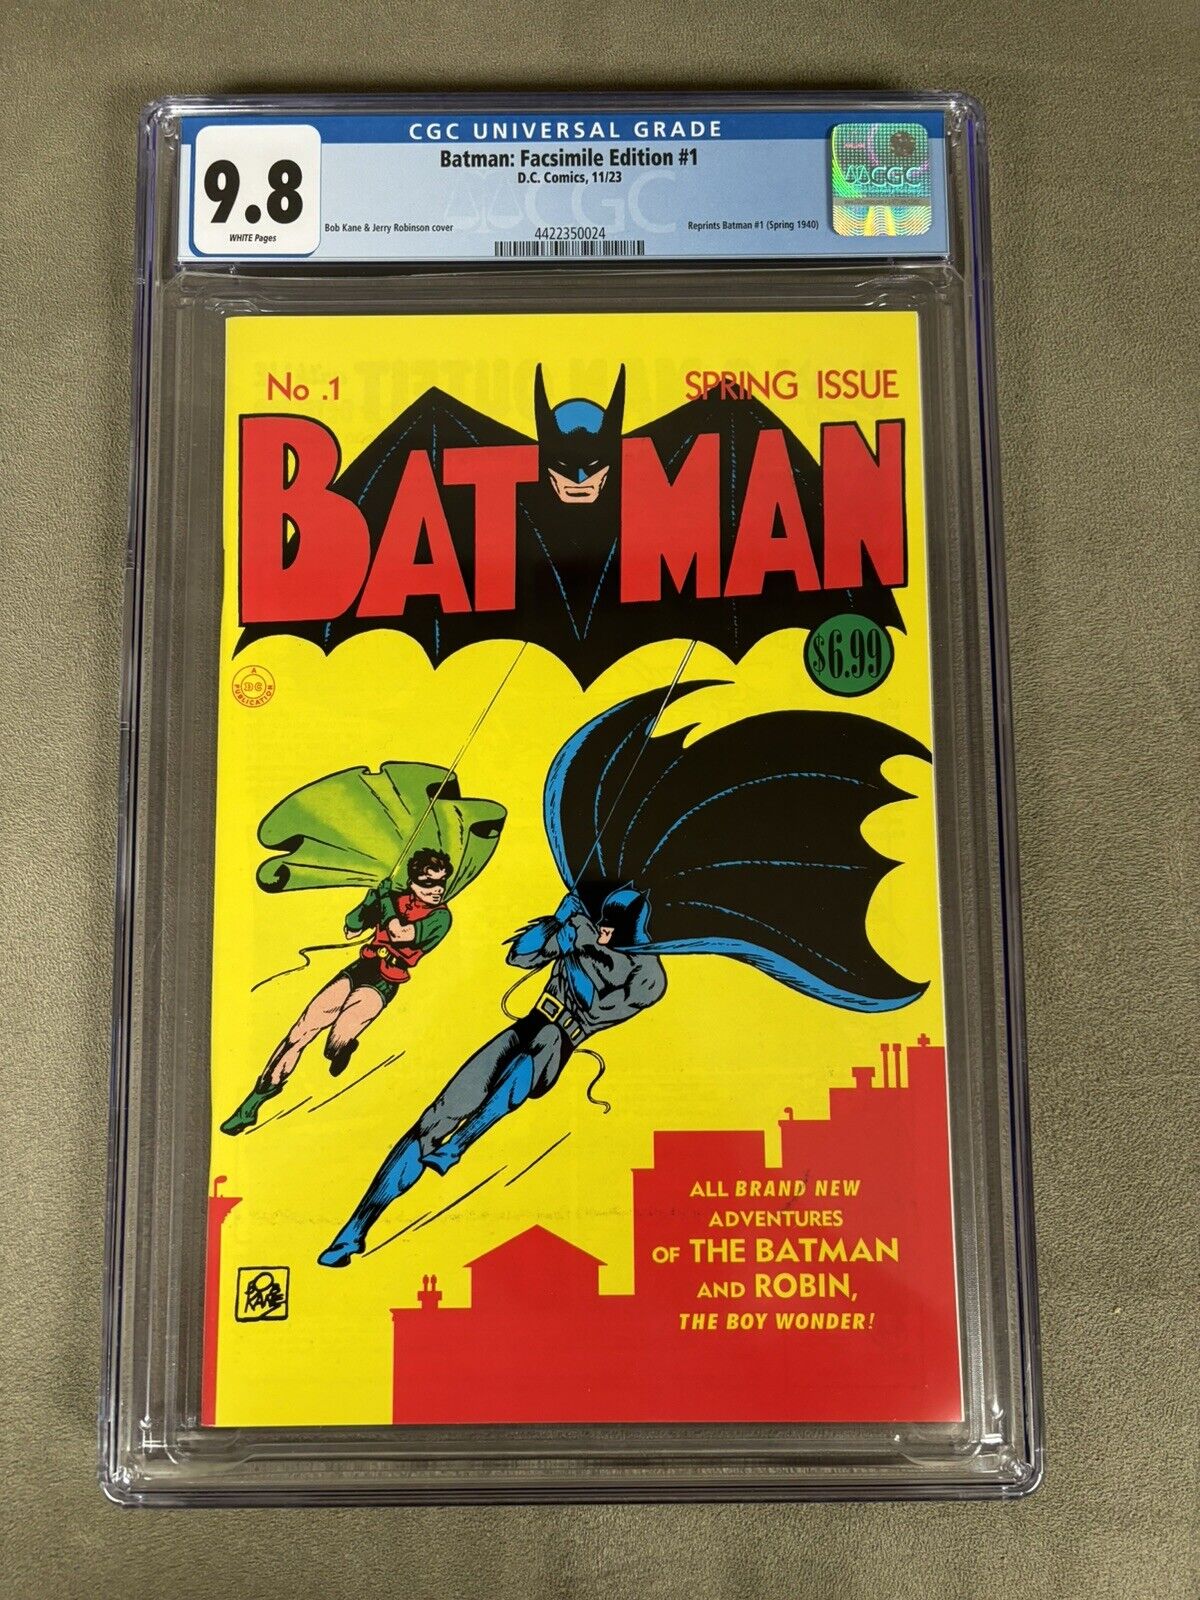 Batman: Facsimile Edition 1 CGC 9.8 Reprints Batman #1 (Spring 1940)